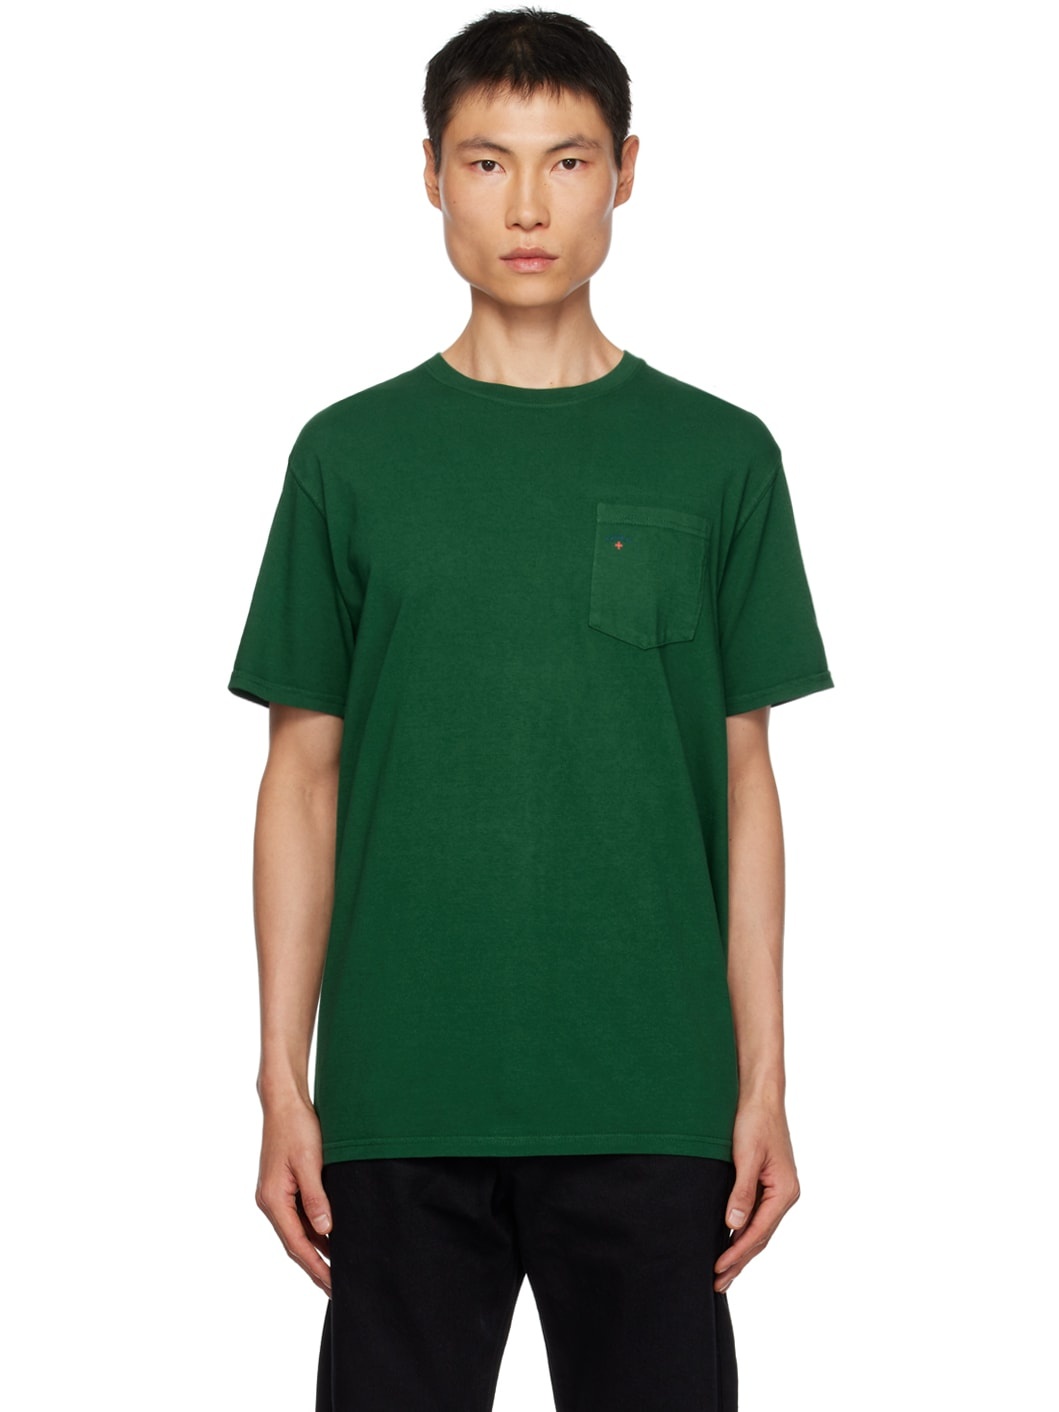 Green Pocket T-Shirt - 1